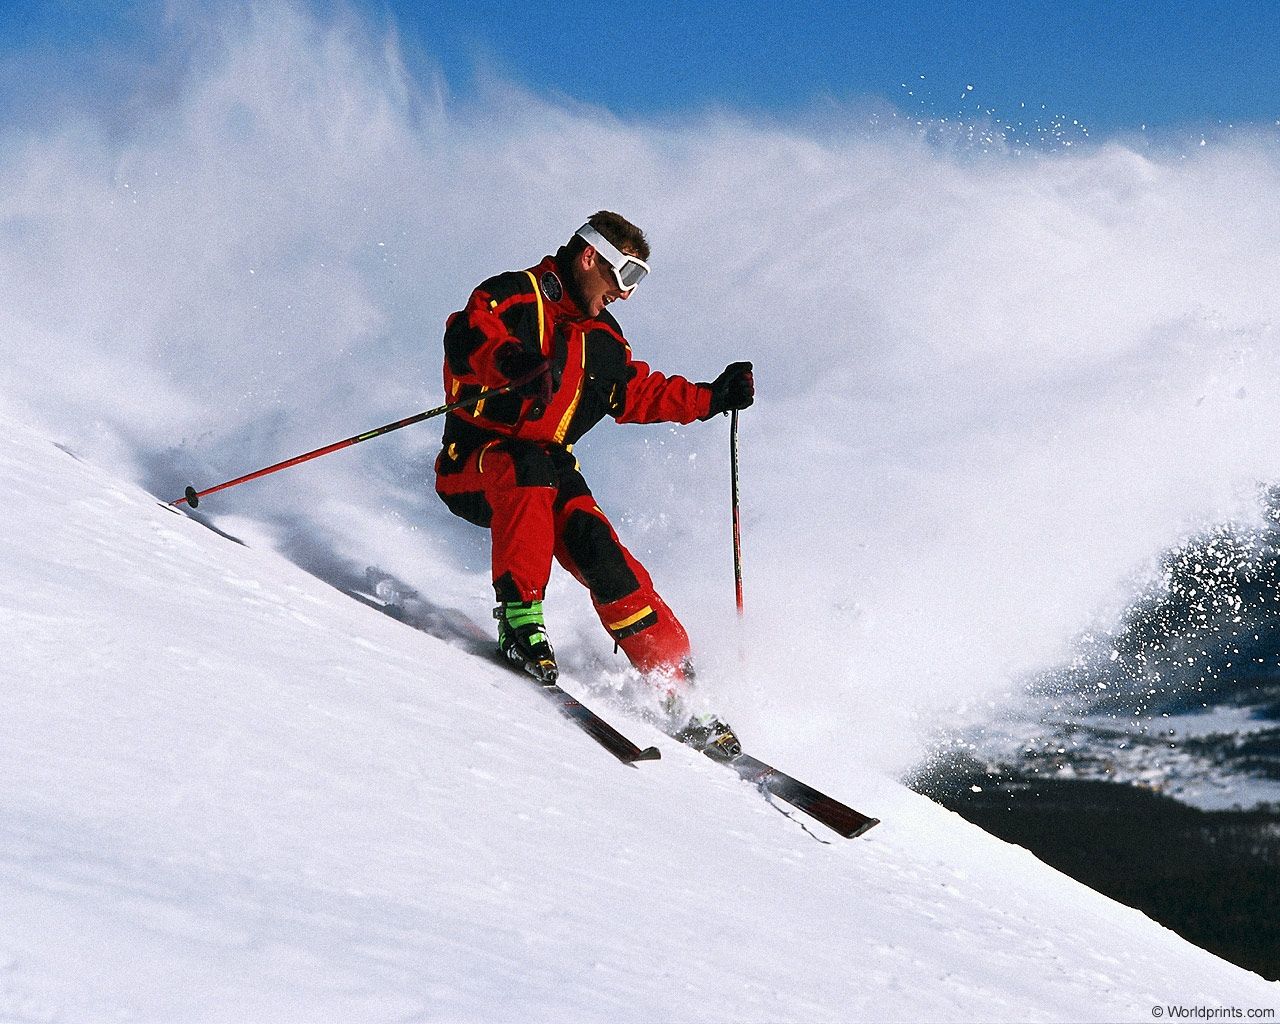 Skiing where. Горнолыжный спорт. Горные лыжи. Спуск с горы на лыжах. Лыжник спускается с горы.